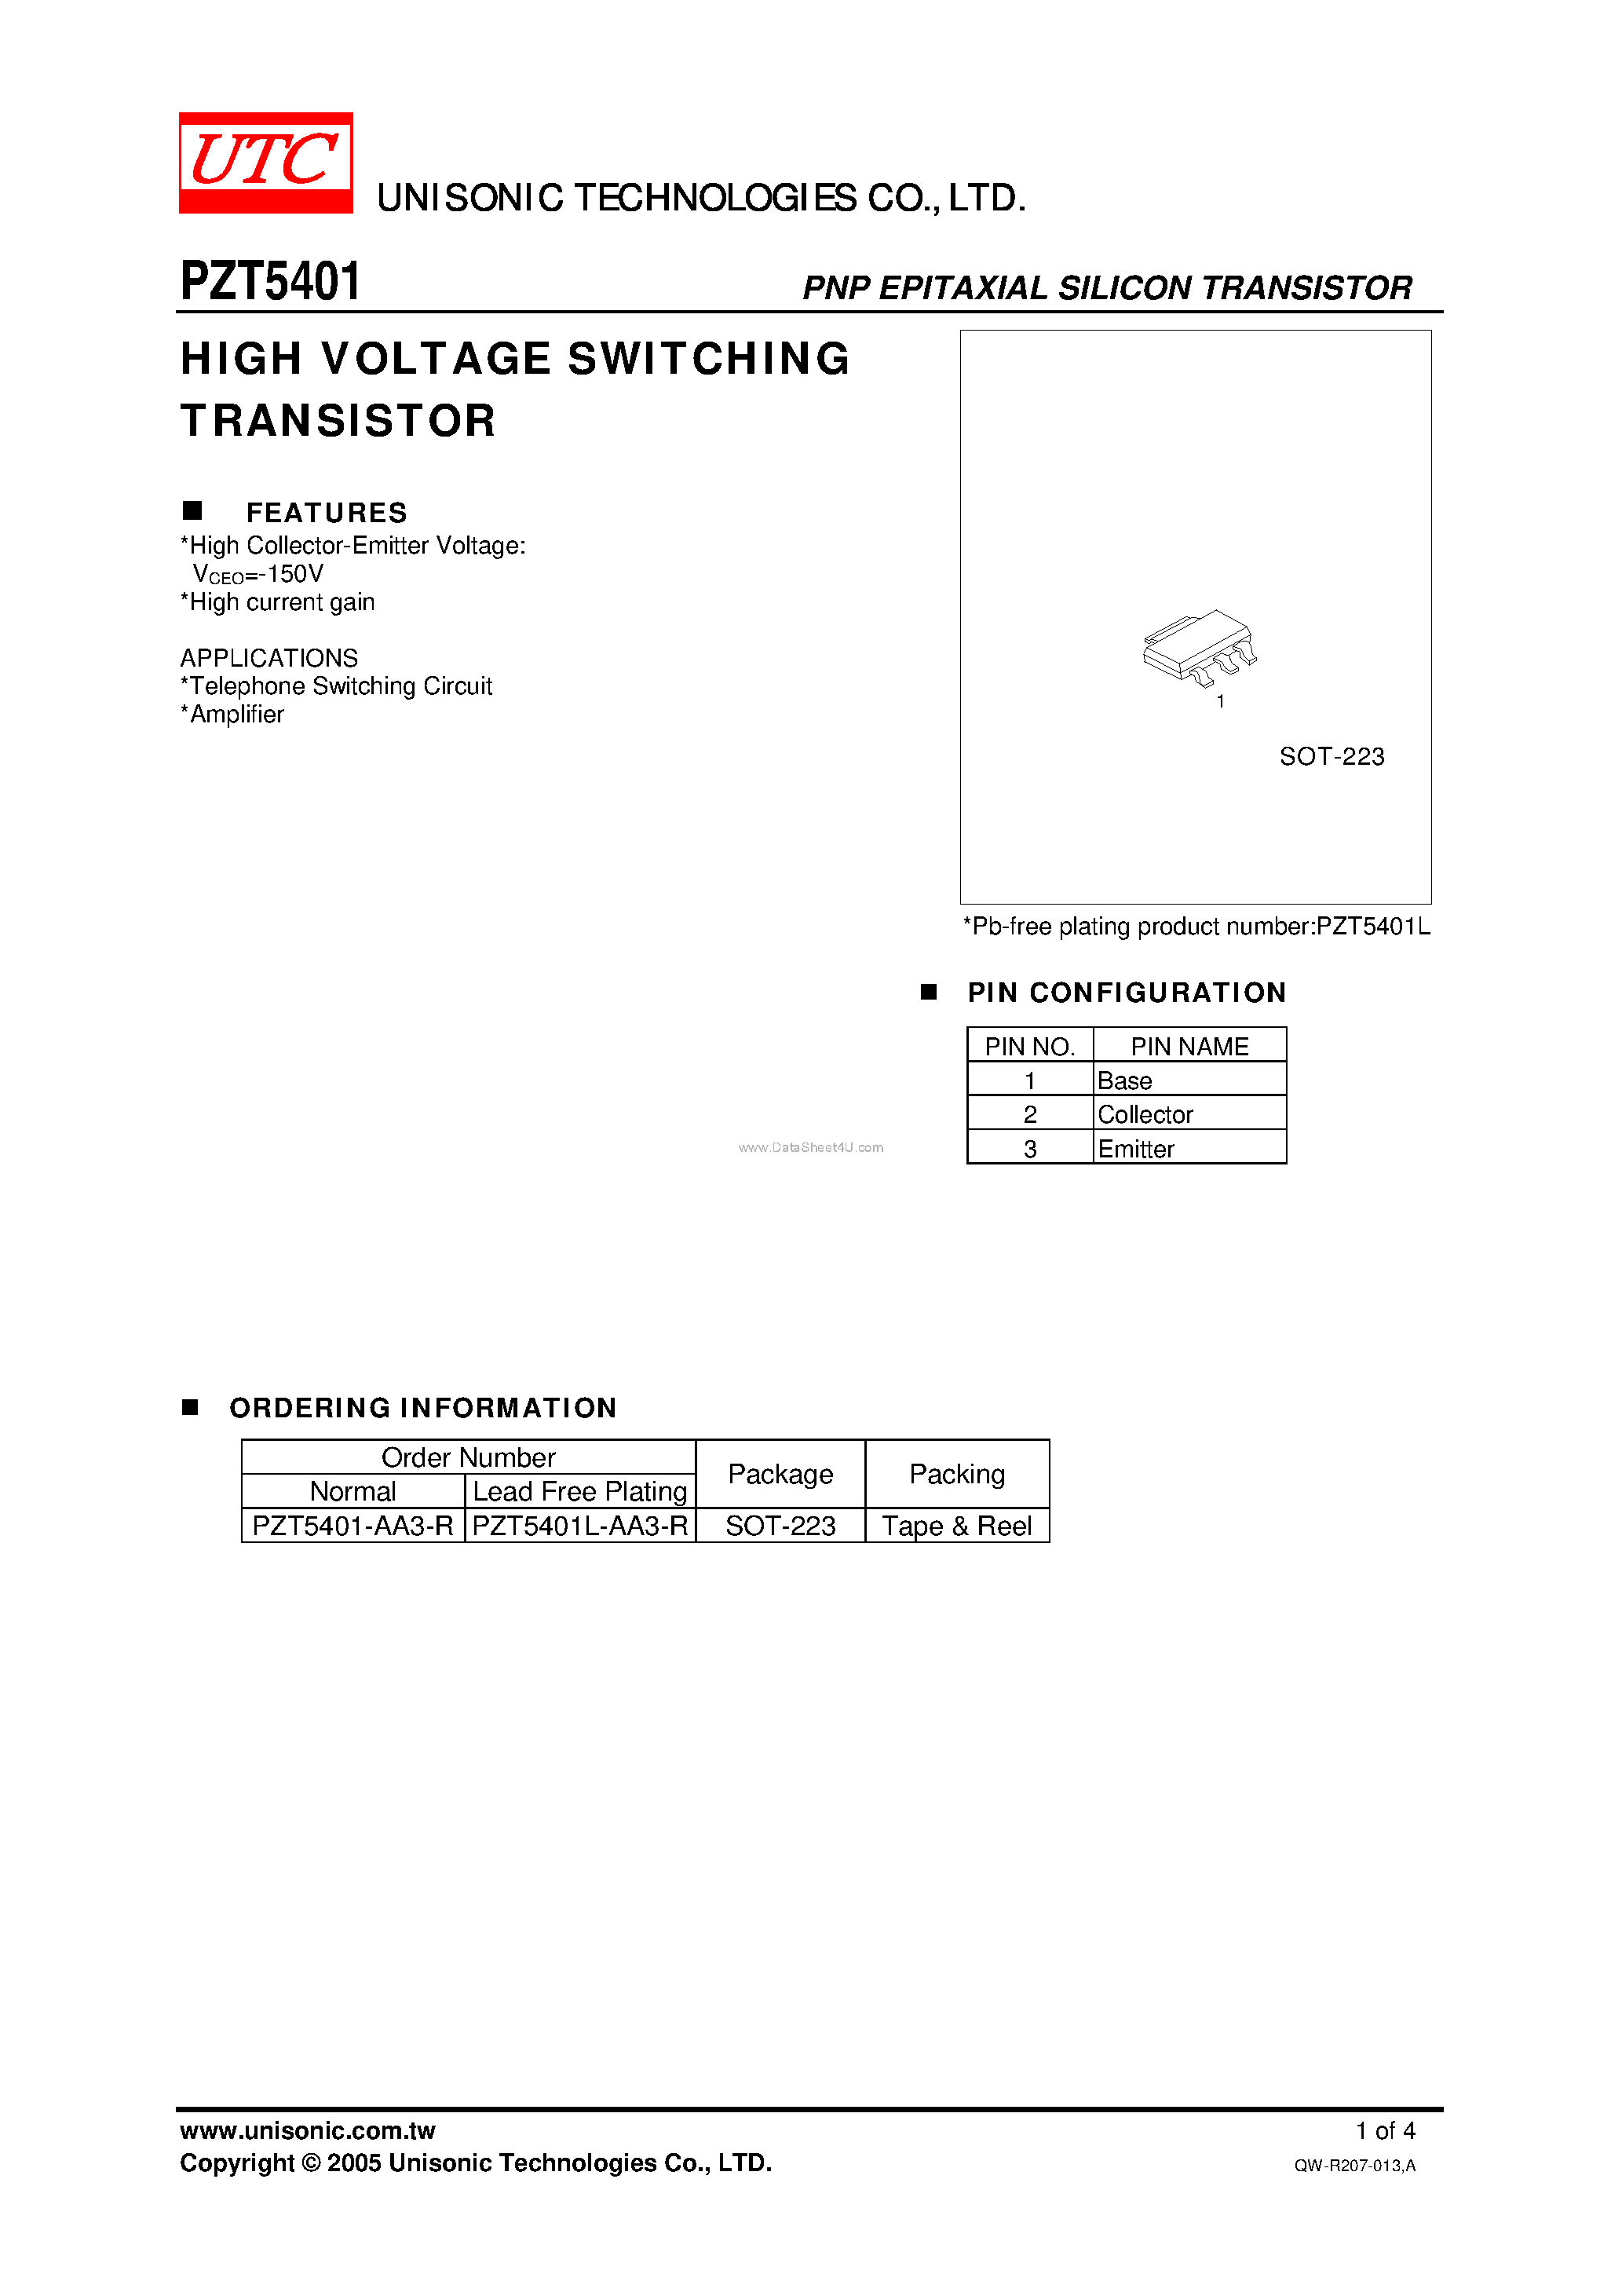 Datasheet PZT5401 - HIGH VOLTAGE SWITCHING TRANSISTOR page 1